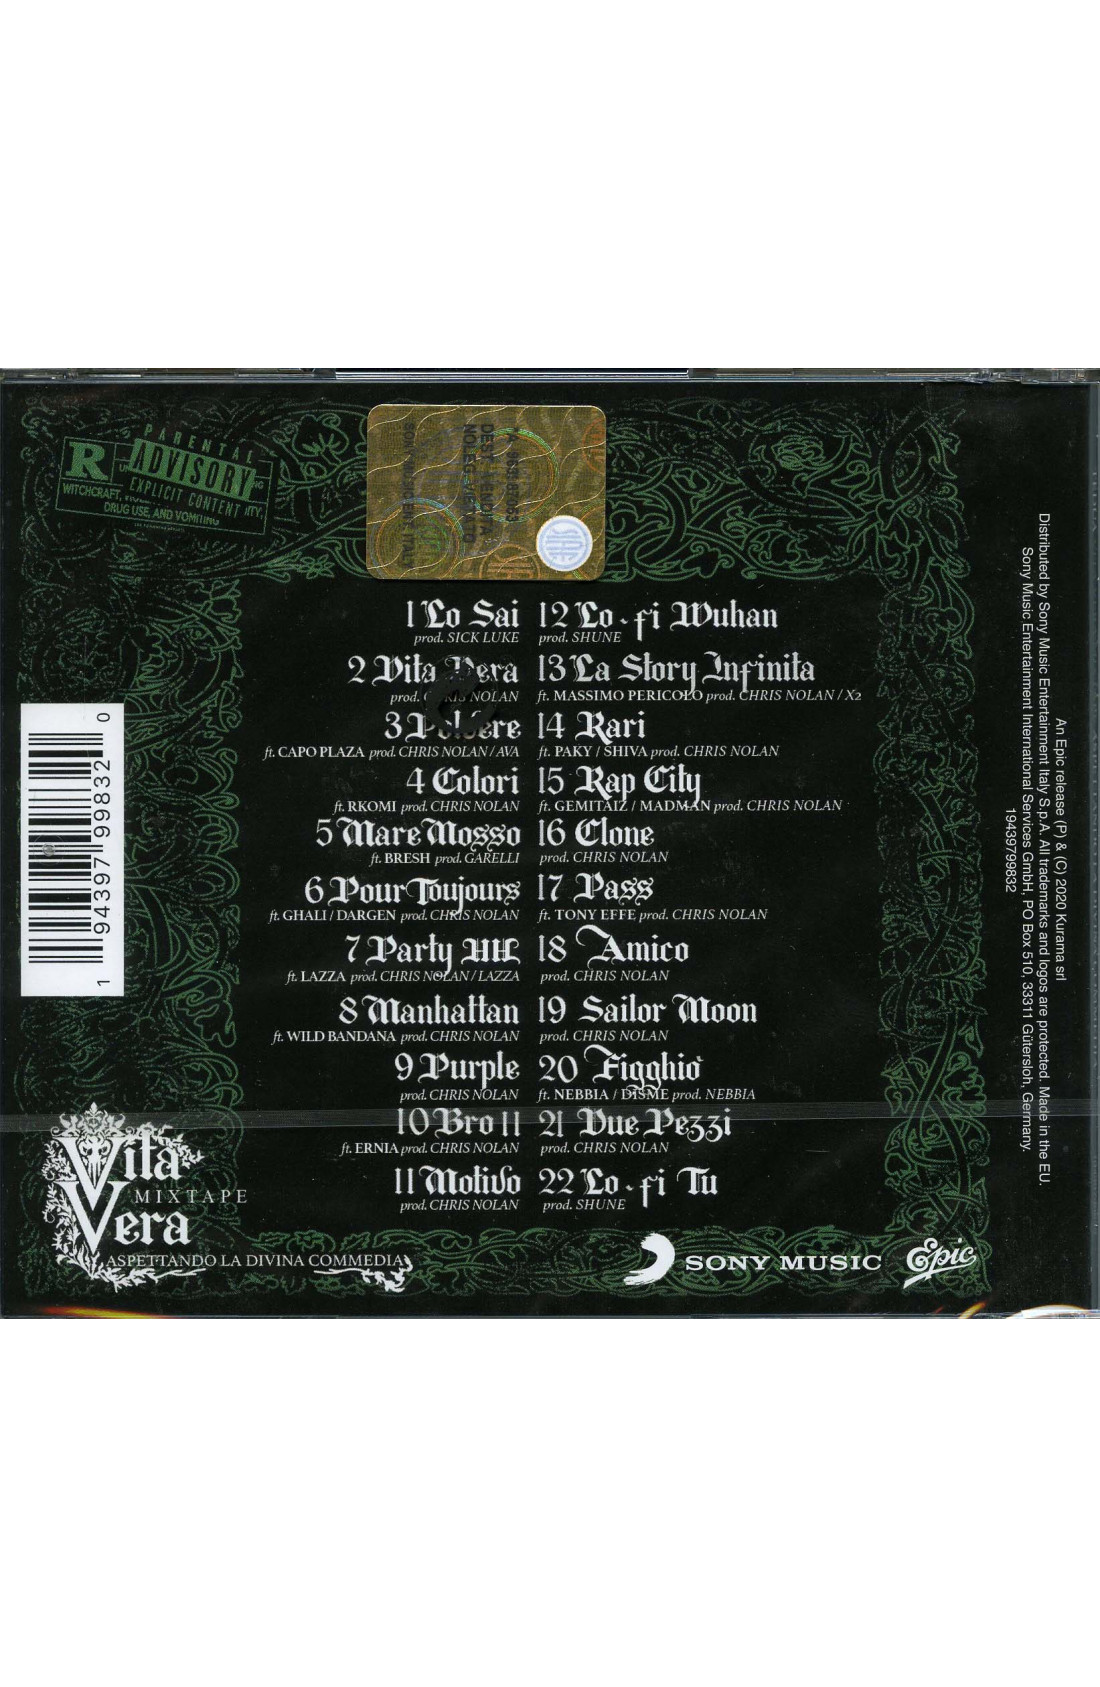 Tedua - Vita Vera Mixtape, Aspettando La Divina Commedia (CD)